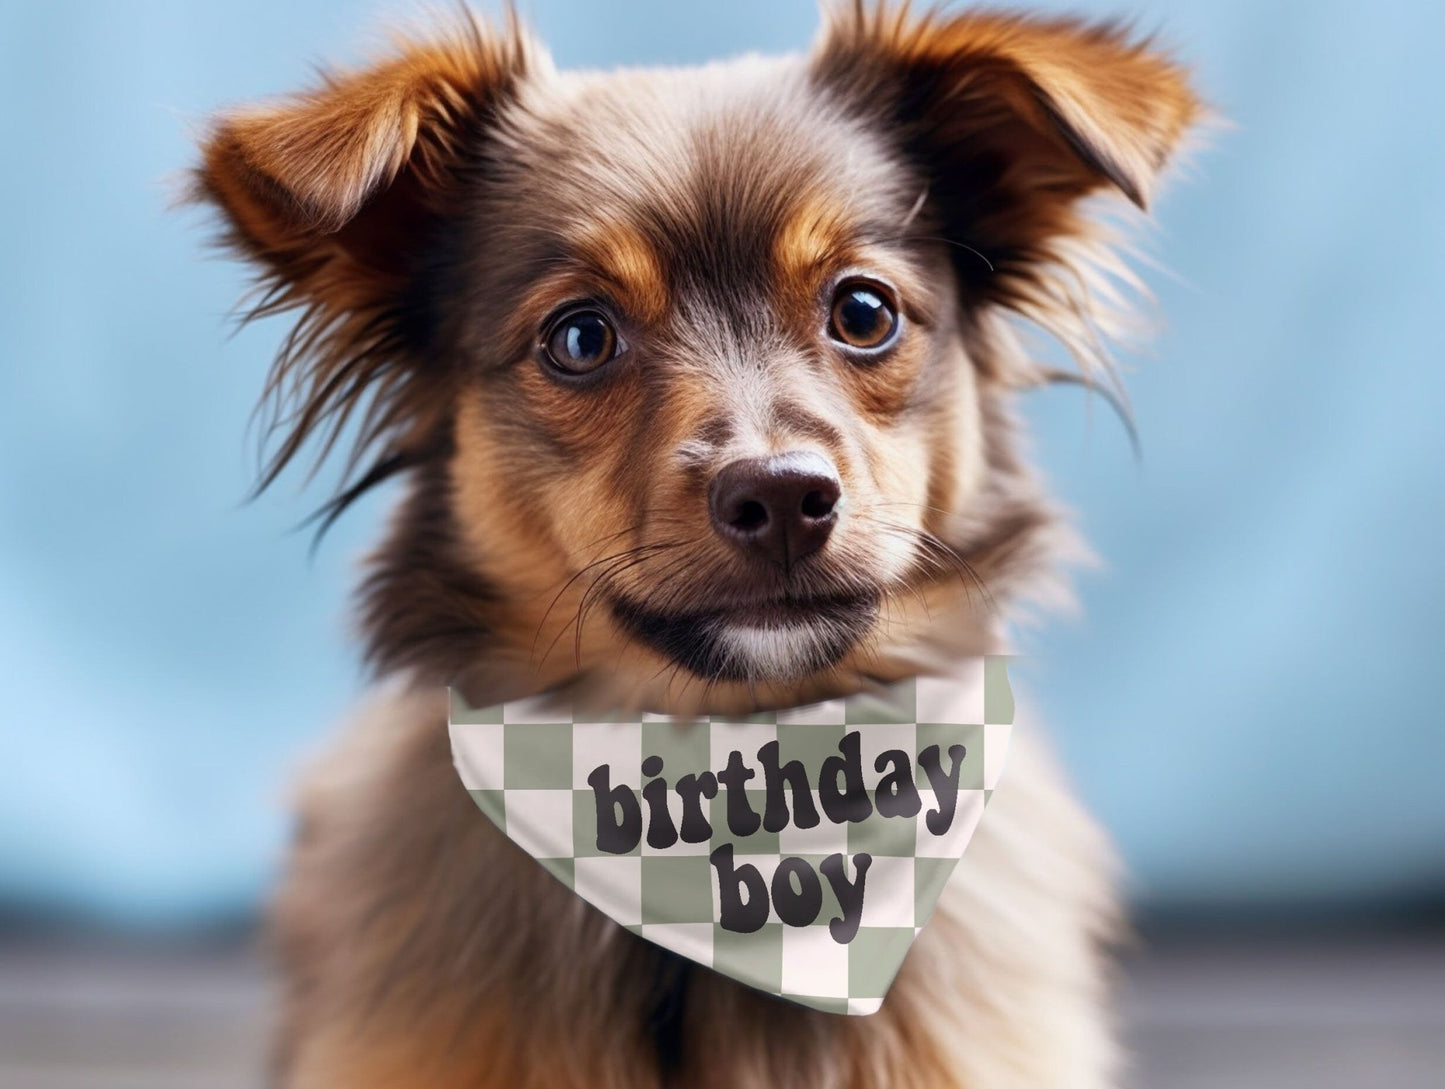 Checkered Birthday Girl Dog Bandana Pet Birthday Party Bandana Dog Scarf - Squishy Cheeks